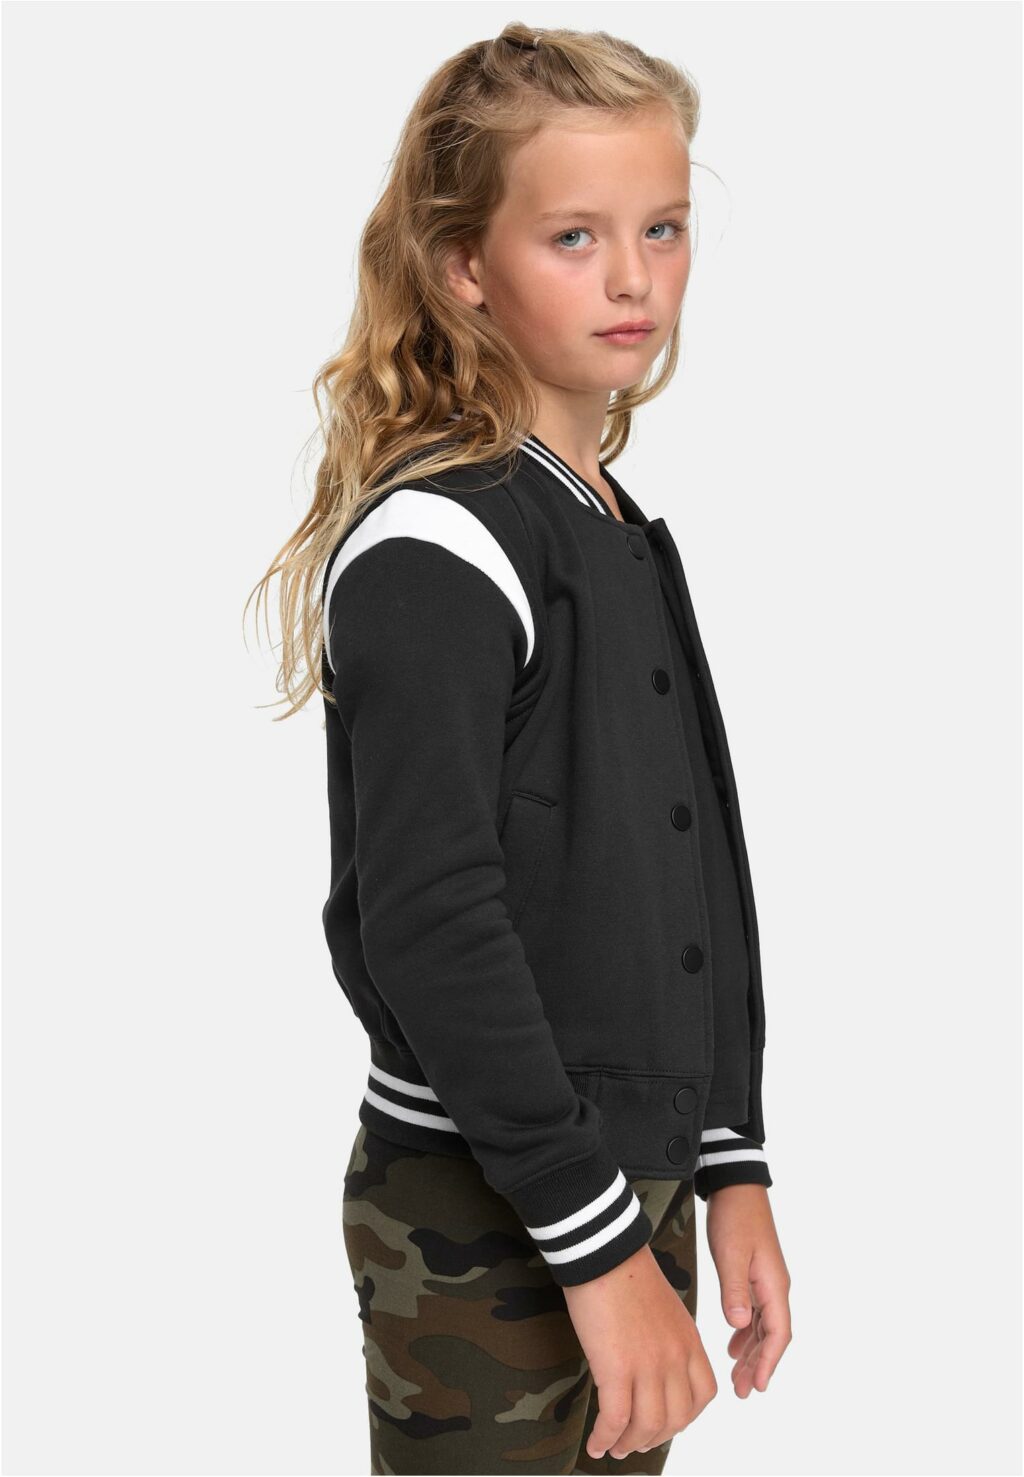 Girls Inset College Sweat Jacket black/white UCK2618